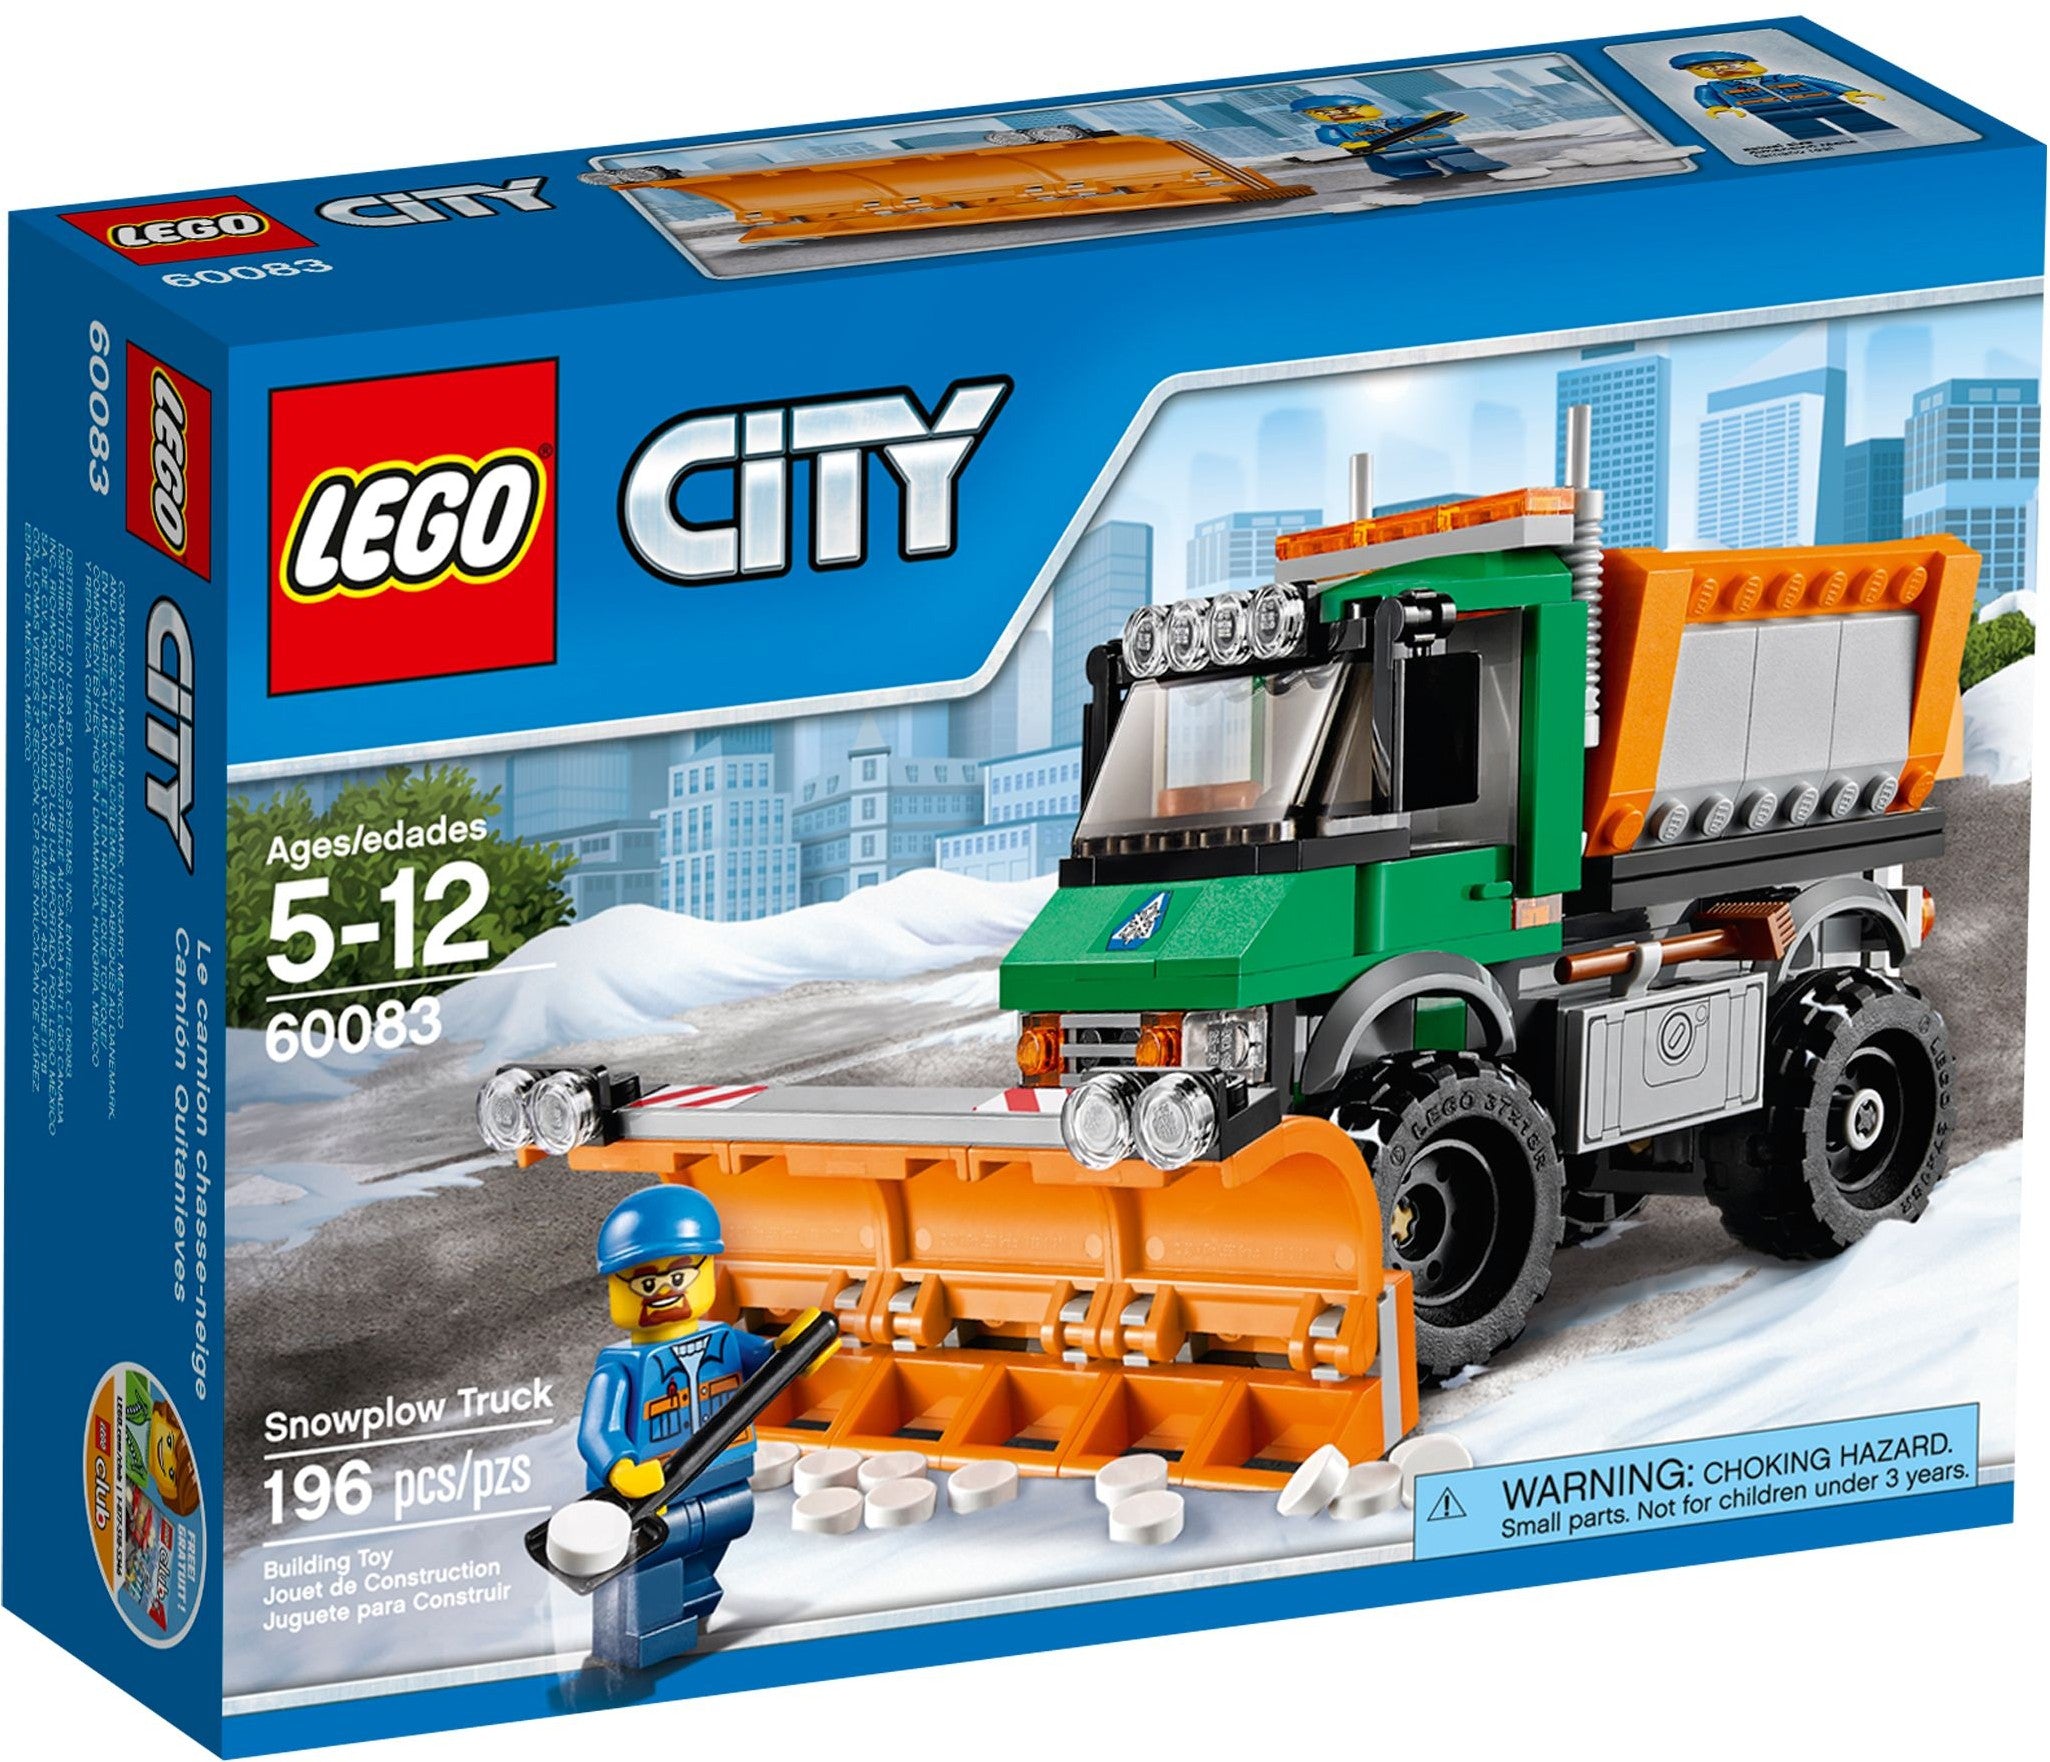 Lego City 60083 - Snowplough Truck